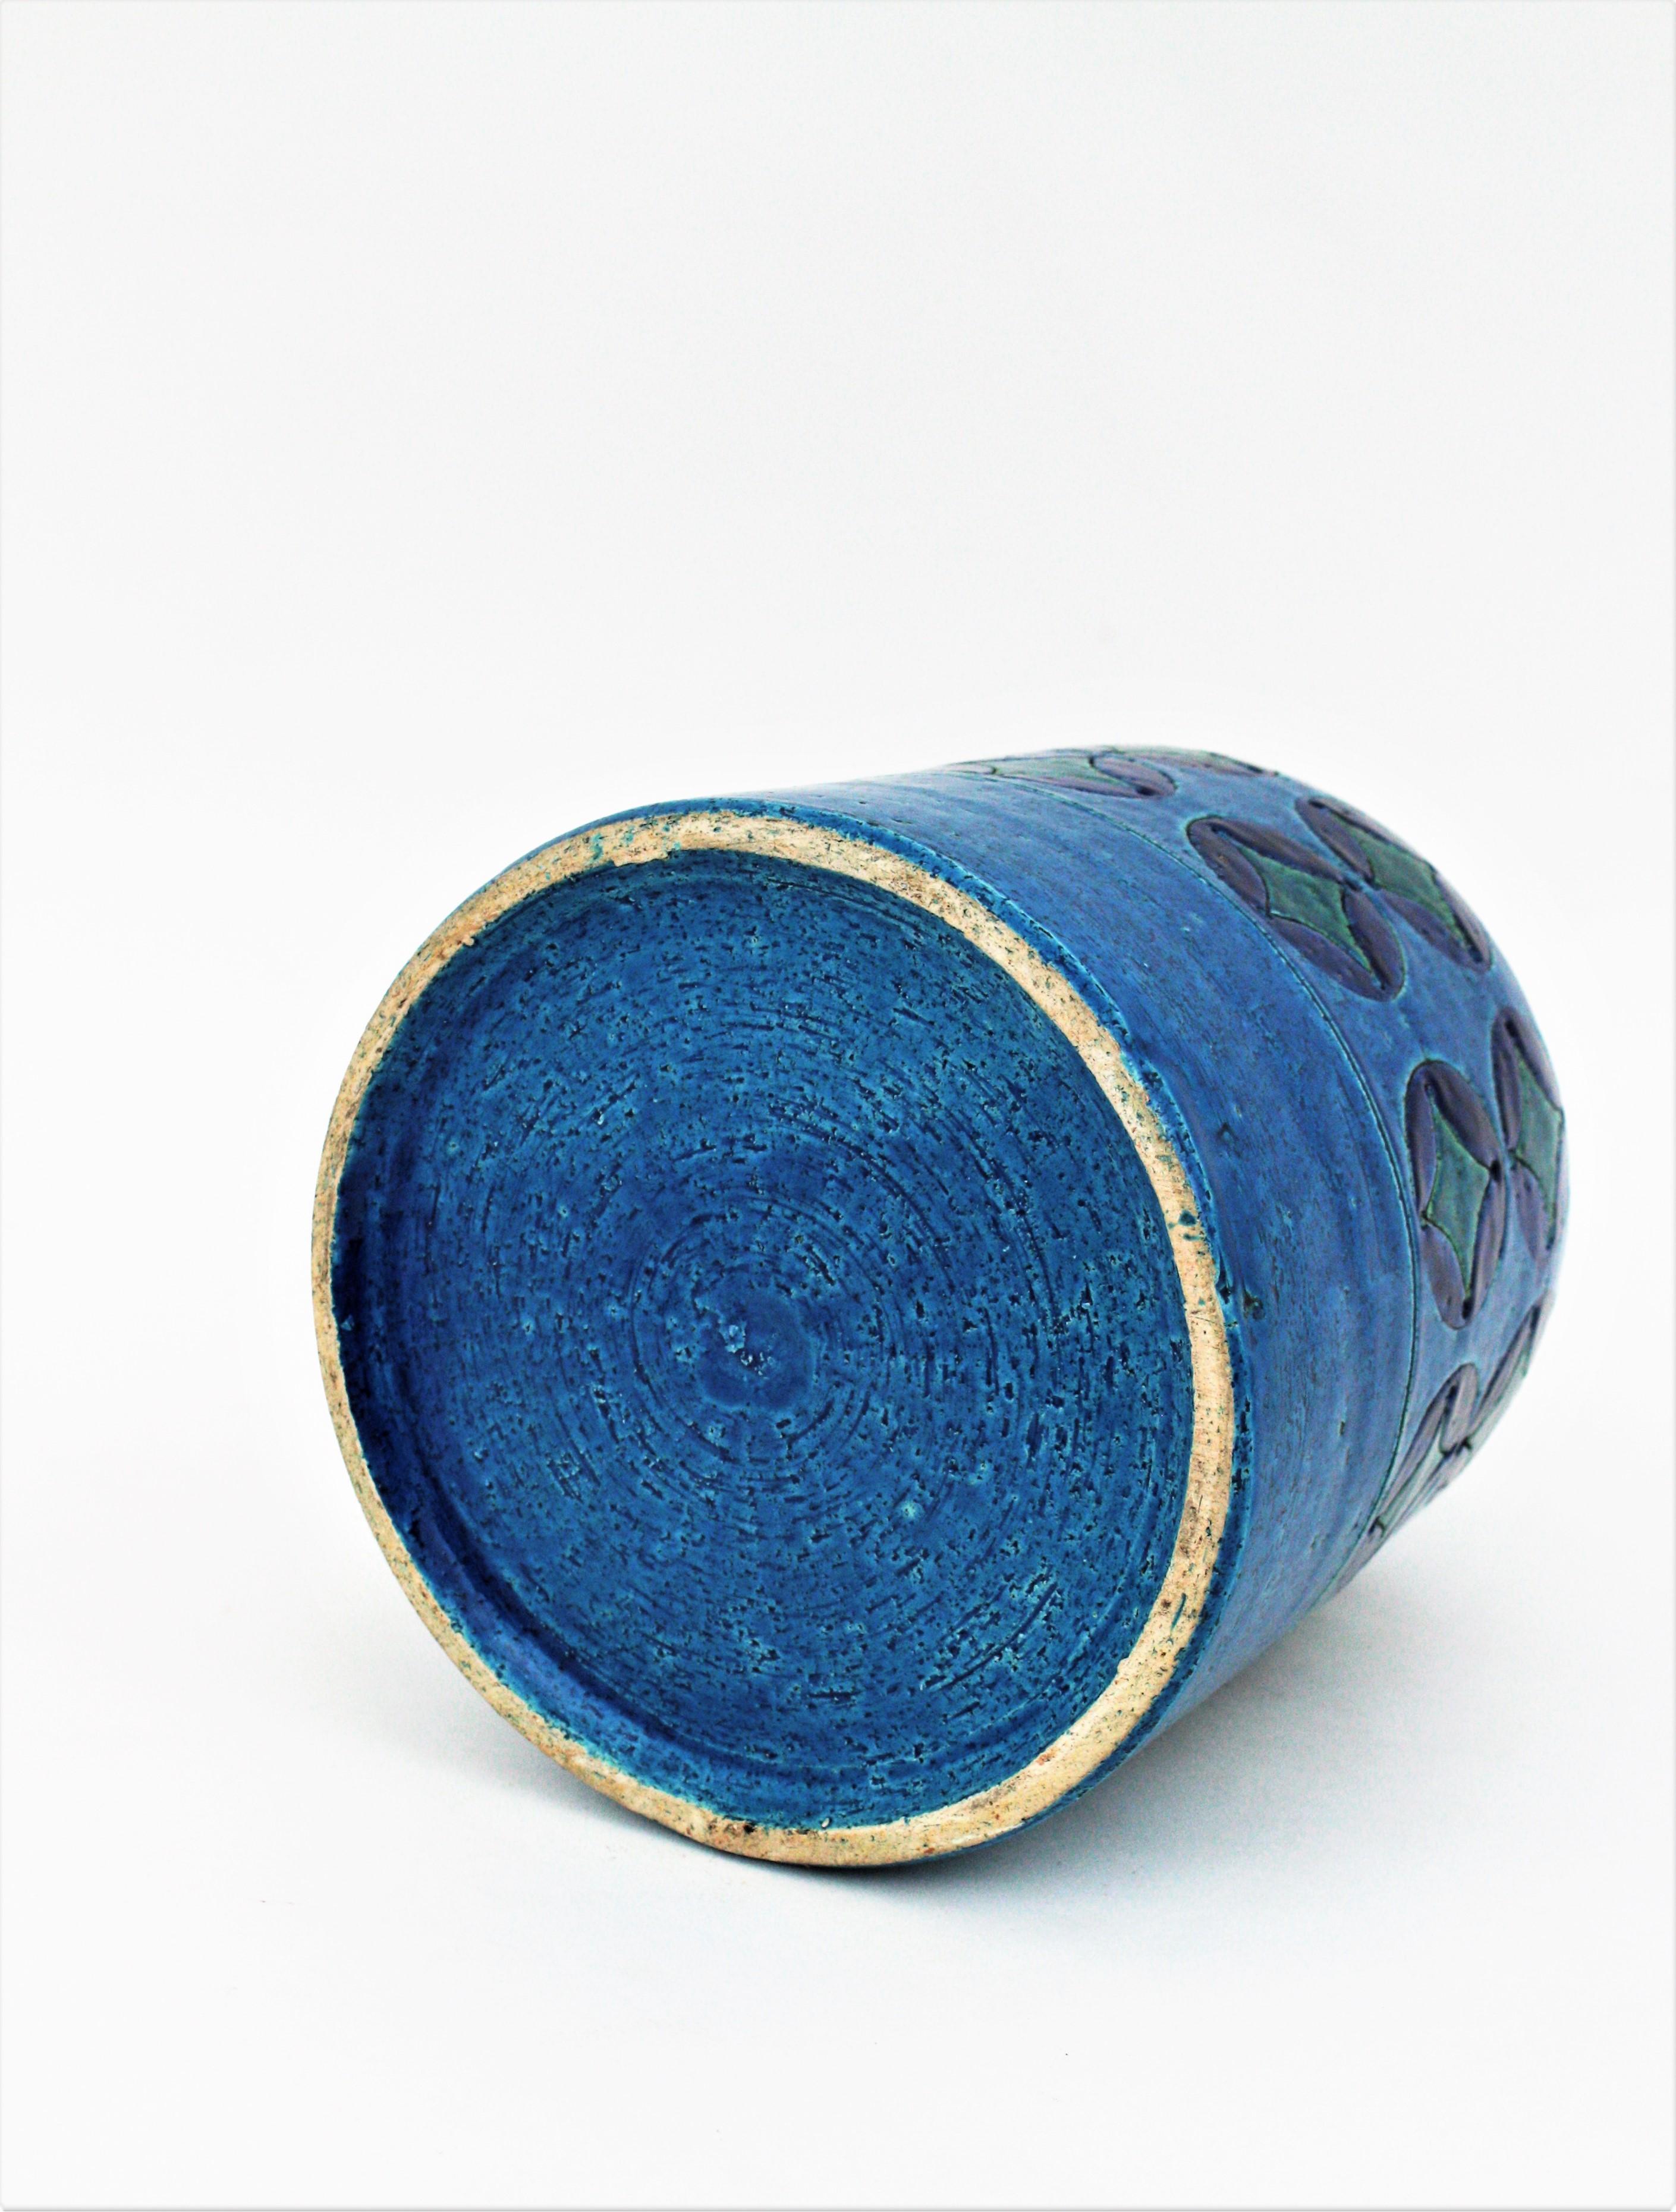 Bitossi Aldo Londi Blue Ceramic Large Bottle Vase with Circles & Rhombus Motif For Sale 2